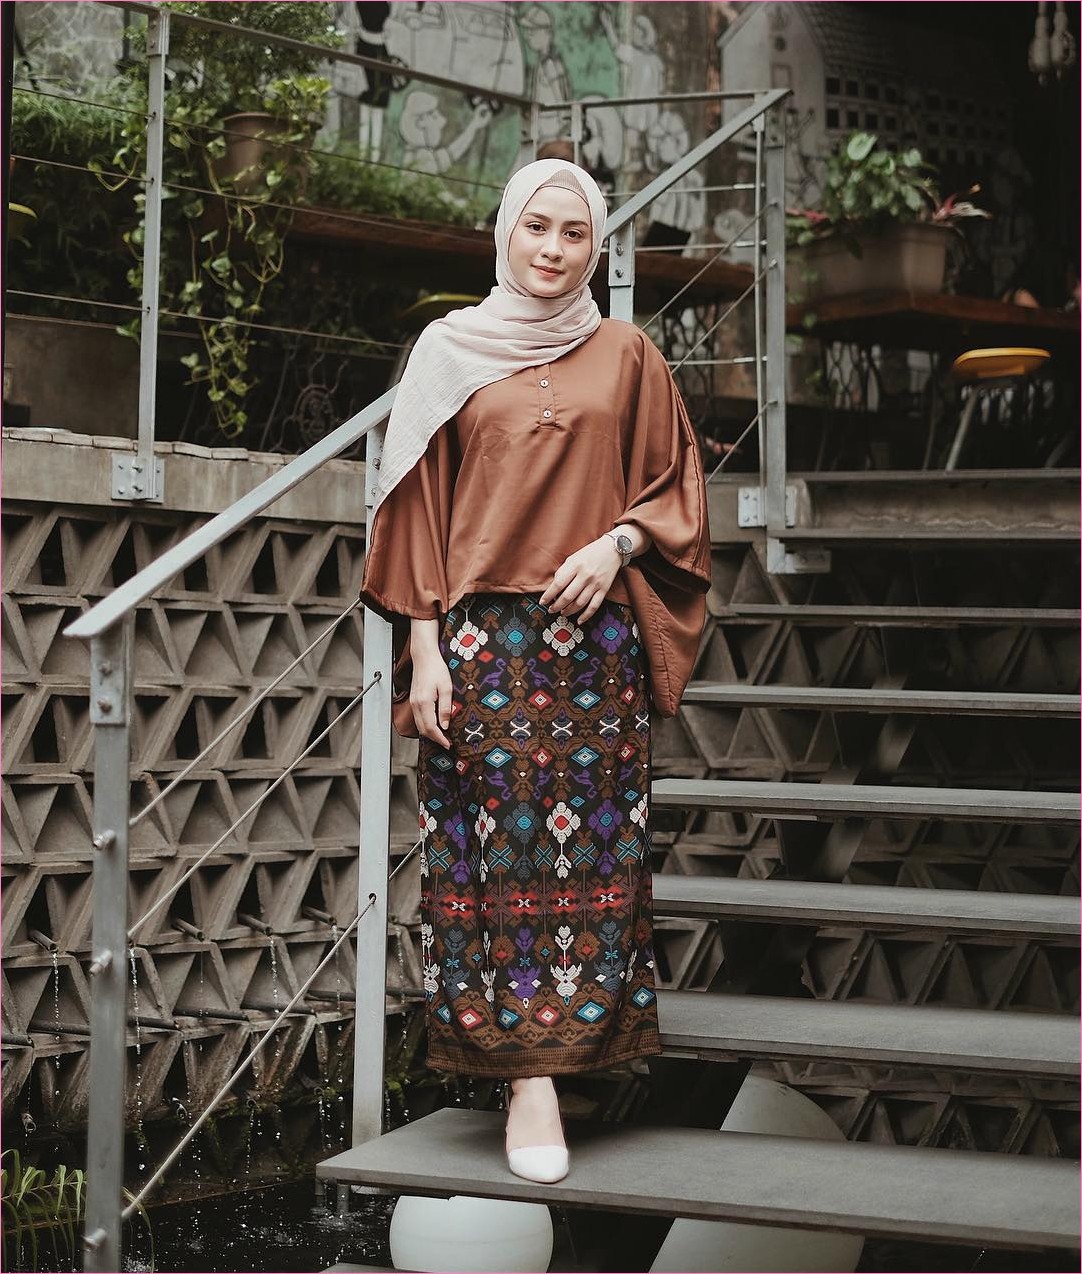 Outfit Baju  Kondangan  Berhijab  Ala Selebgram 2019